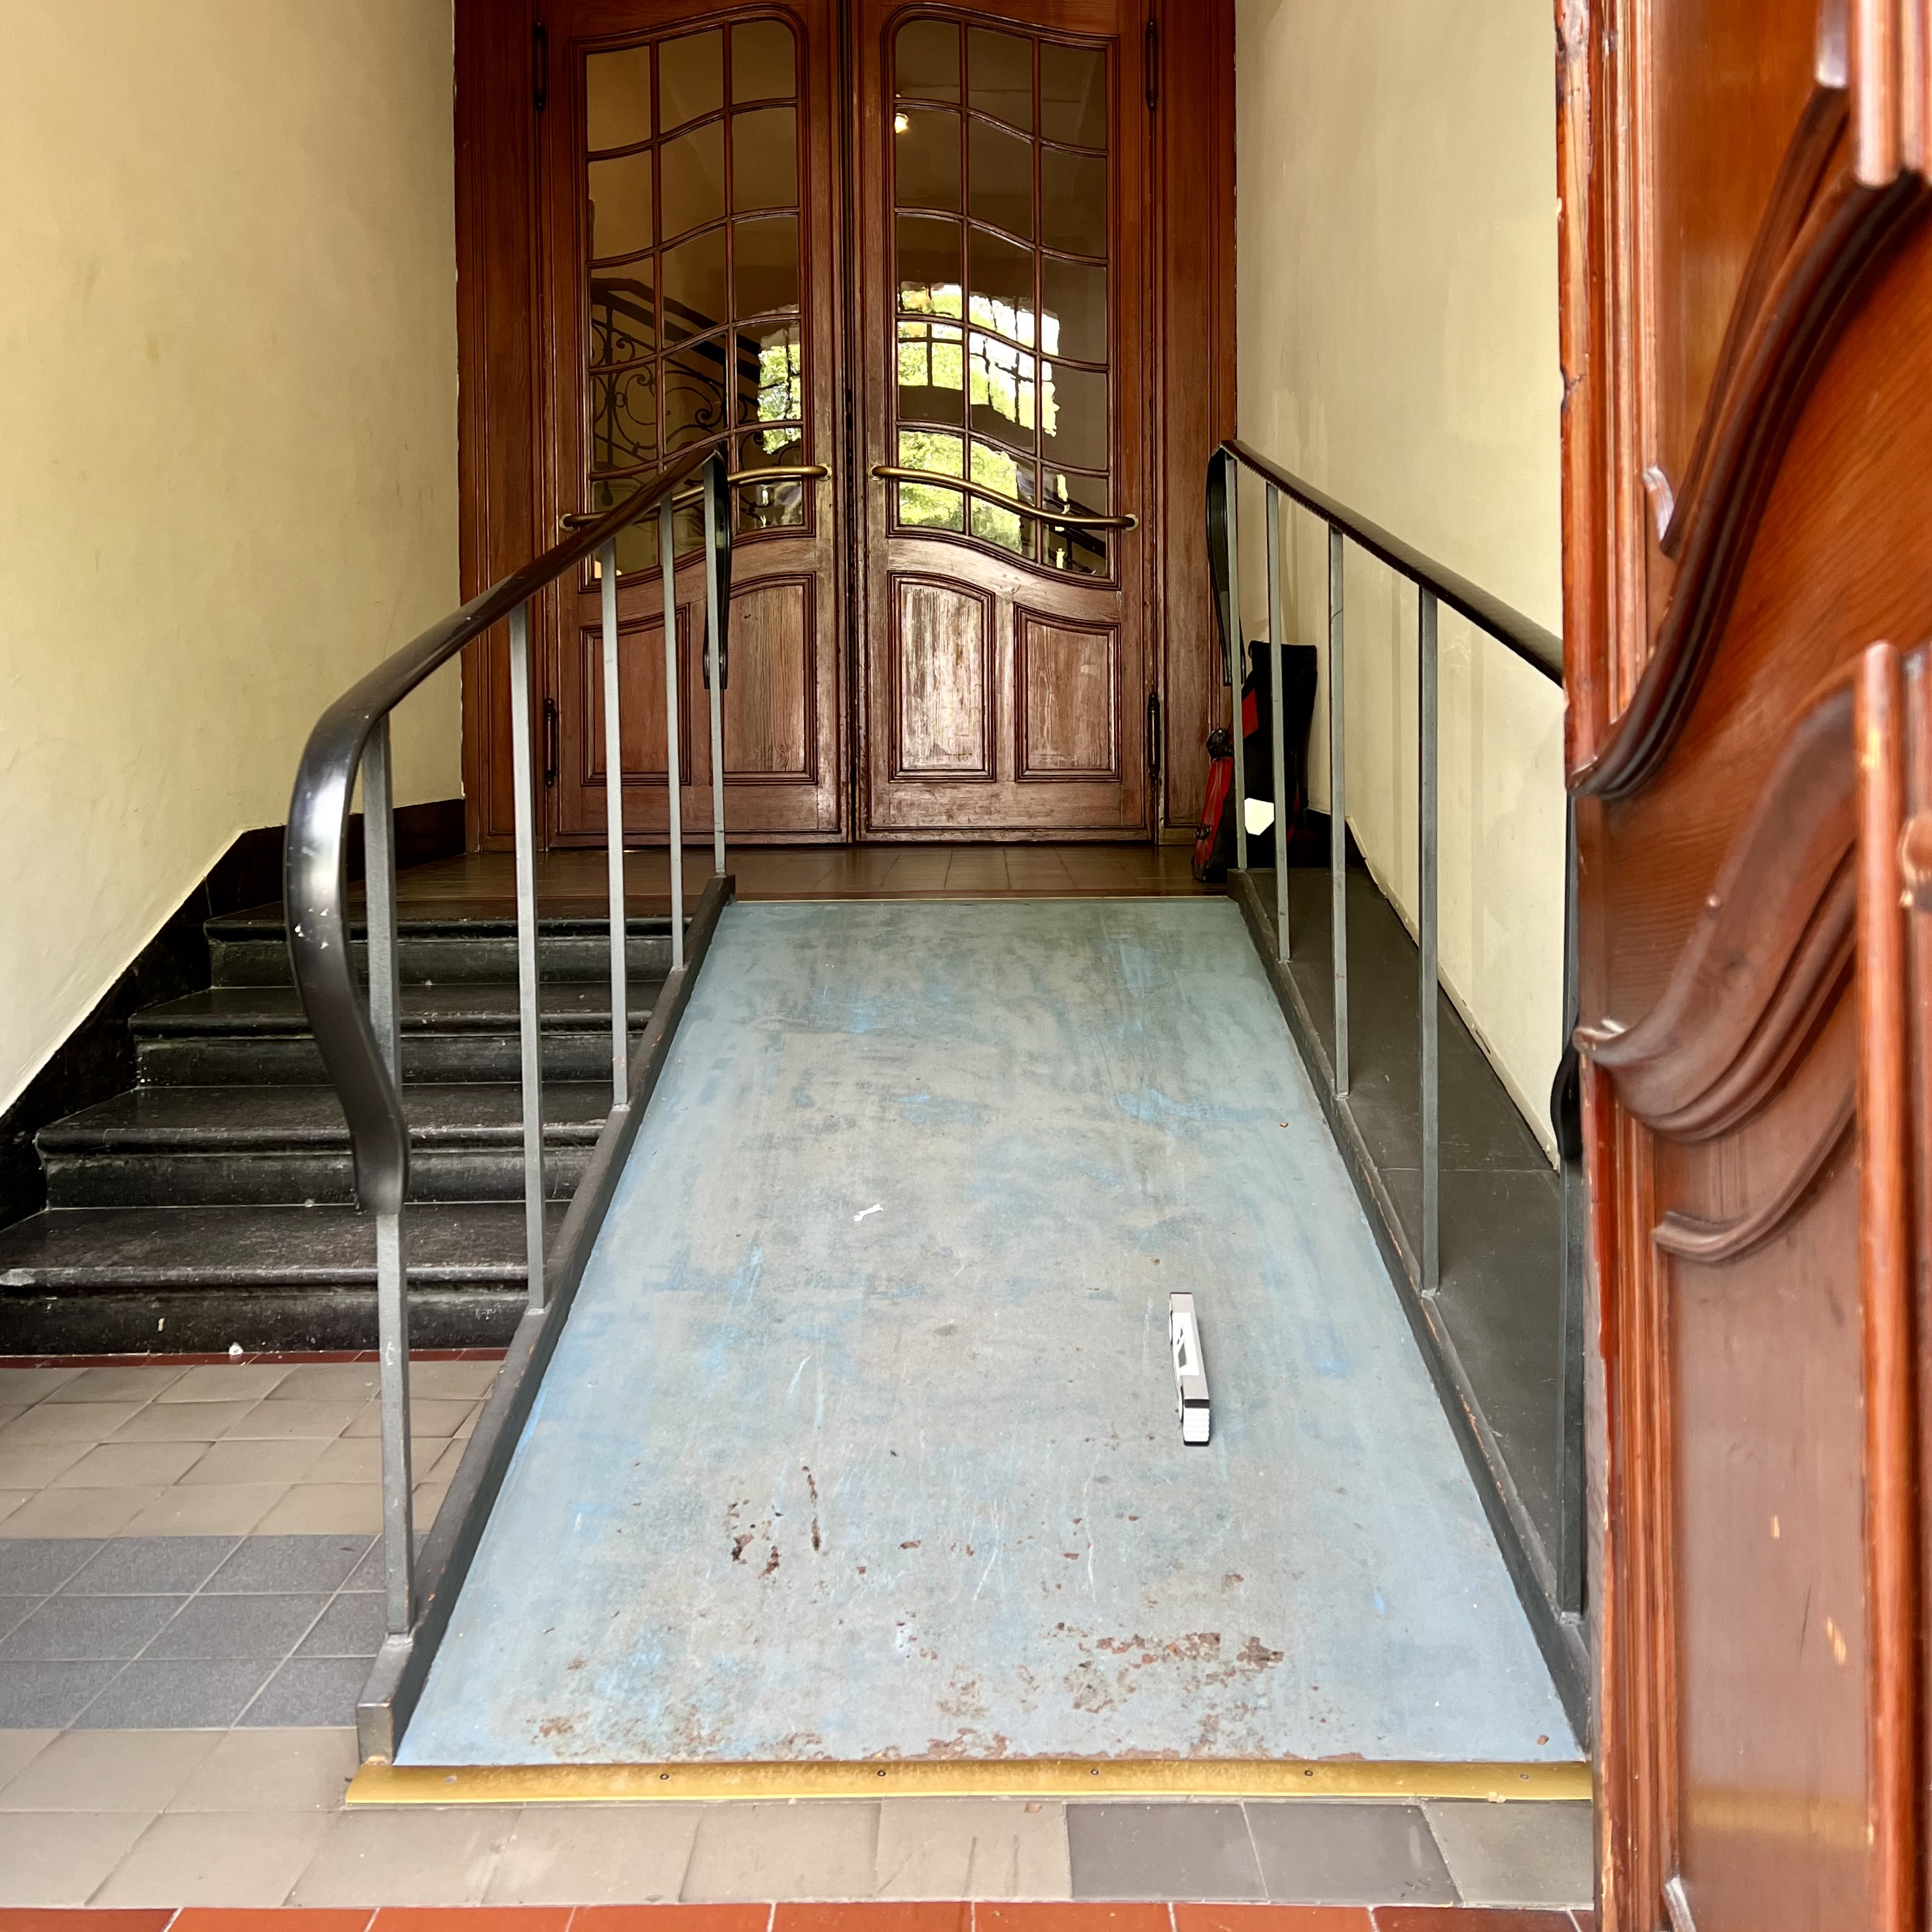 a ramp in a hallway